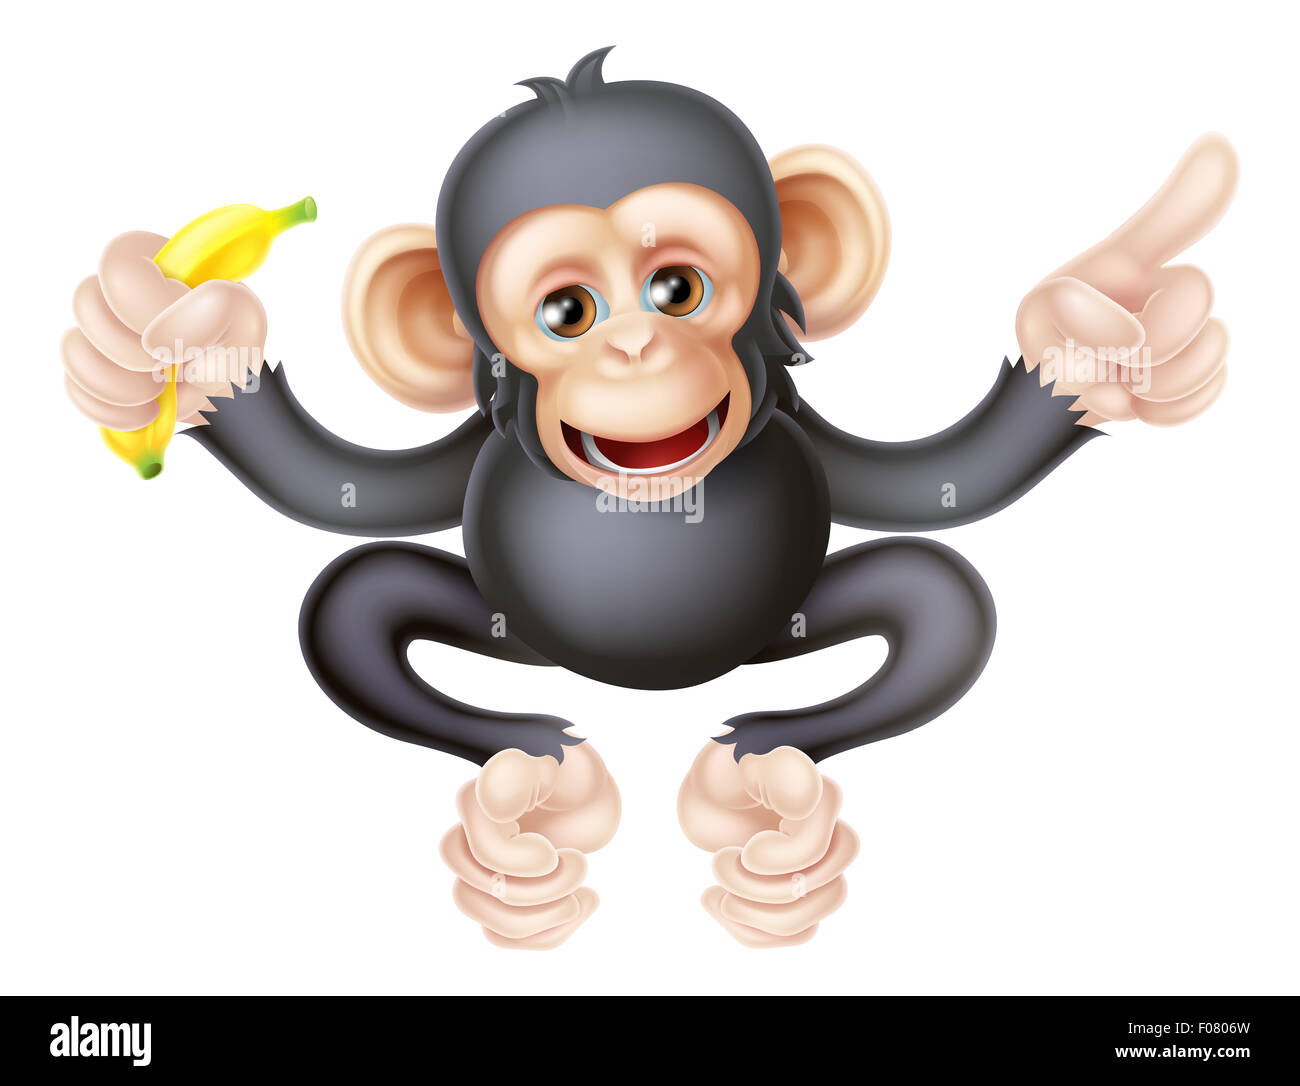 two cartoon monkeys with bananas